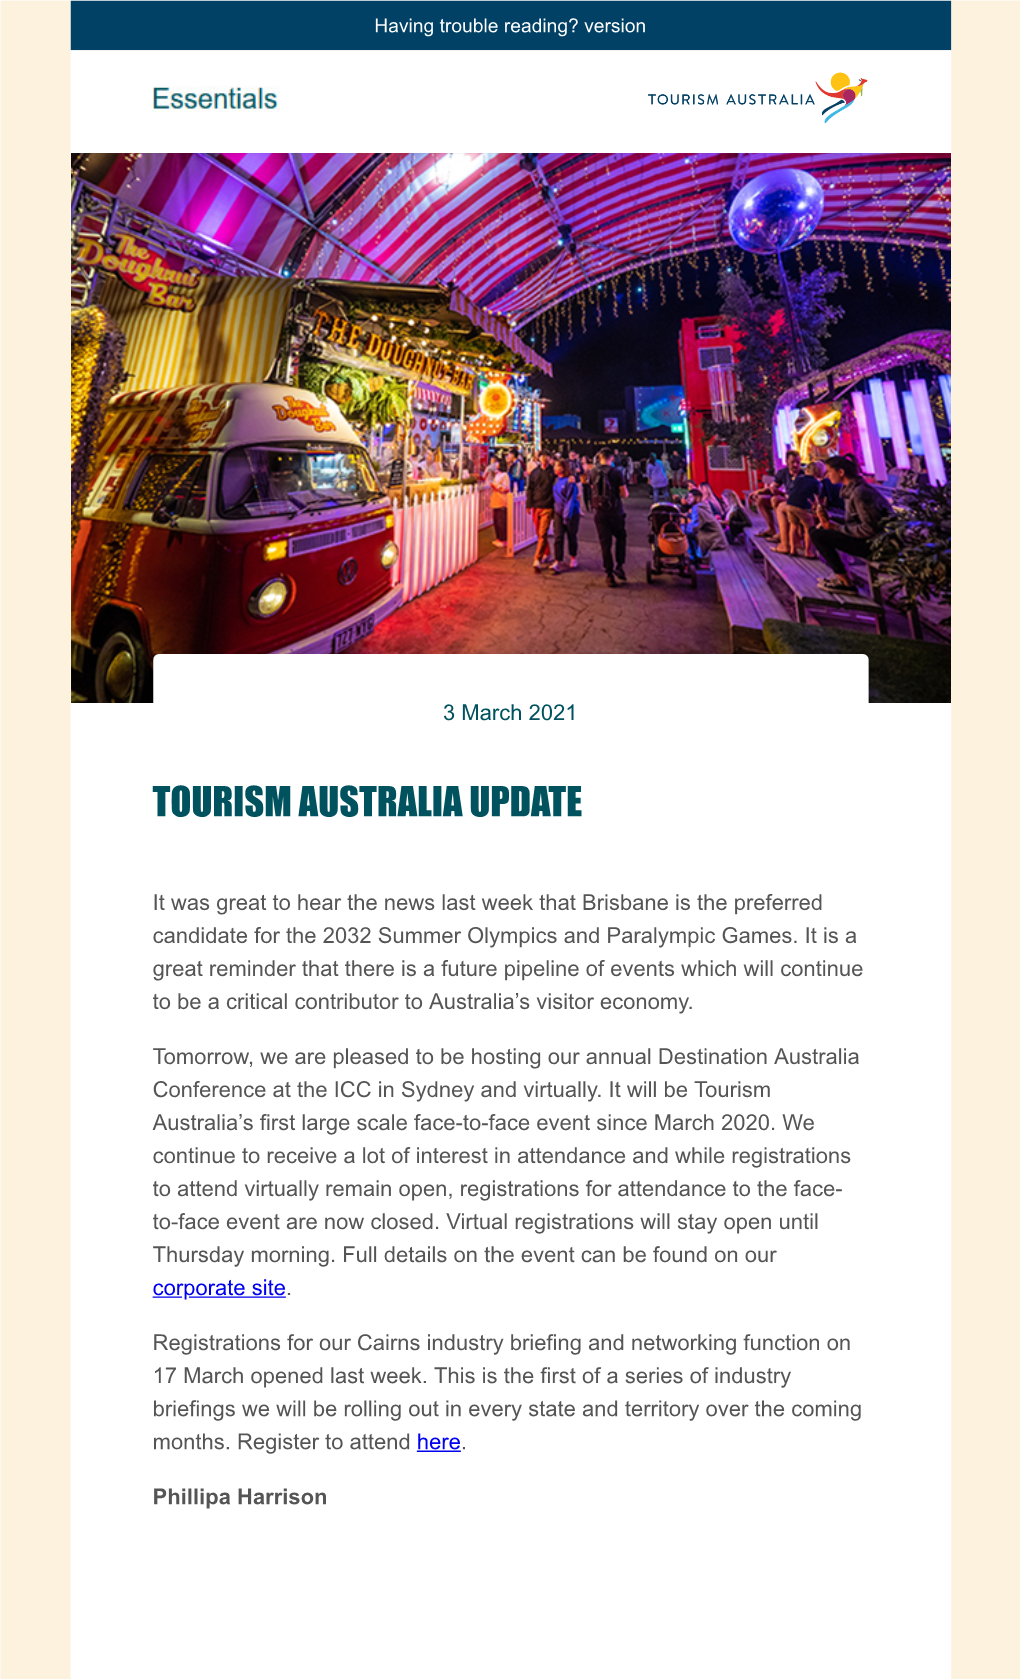 Tourism Australia Update